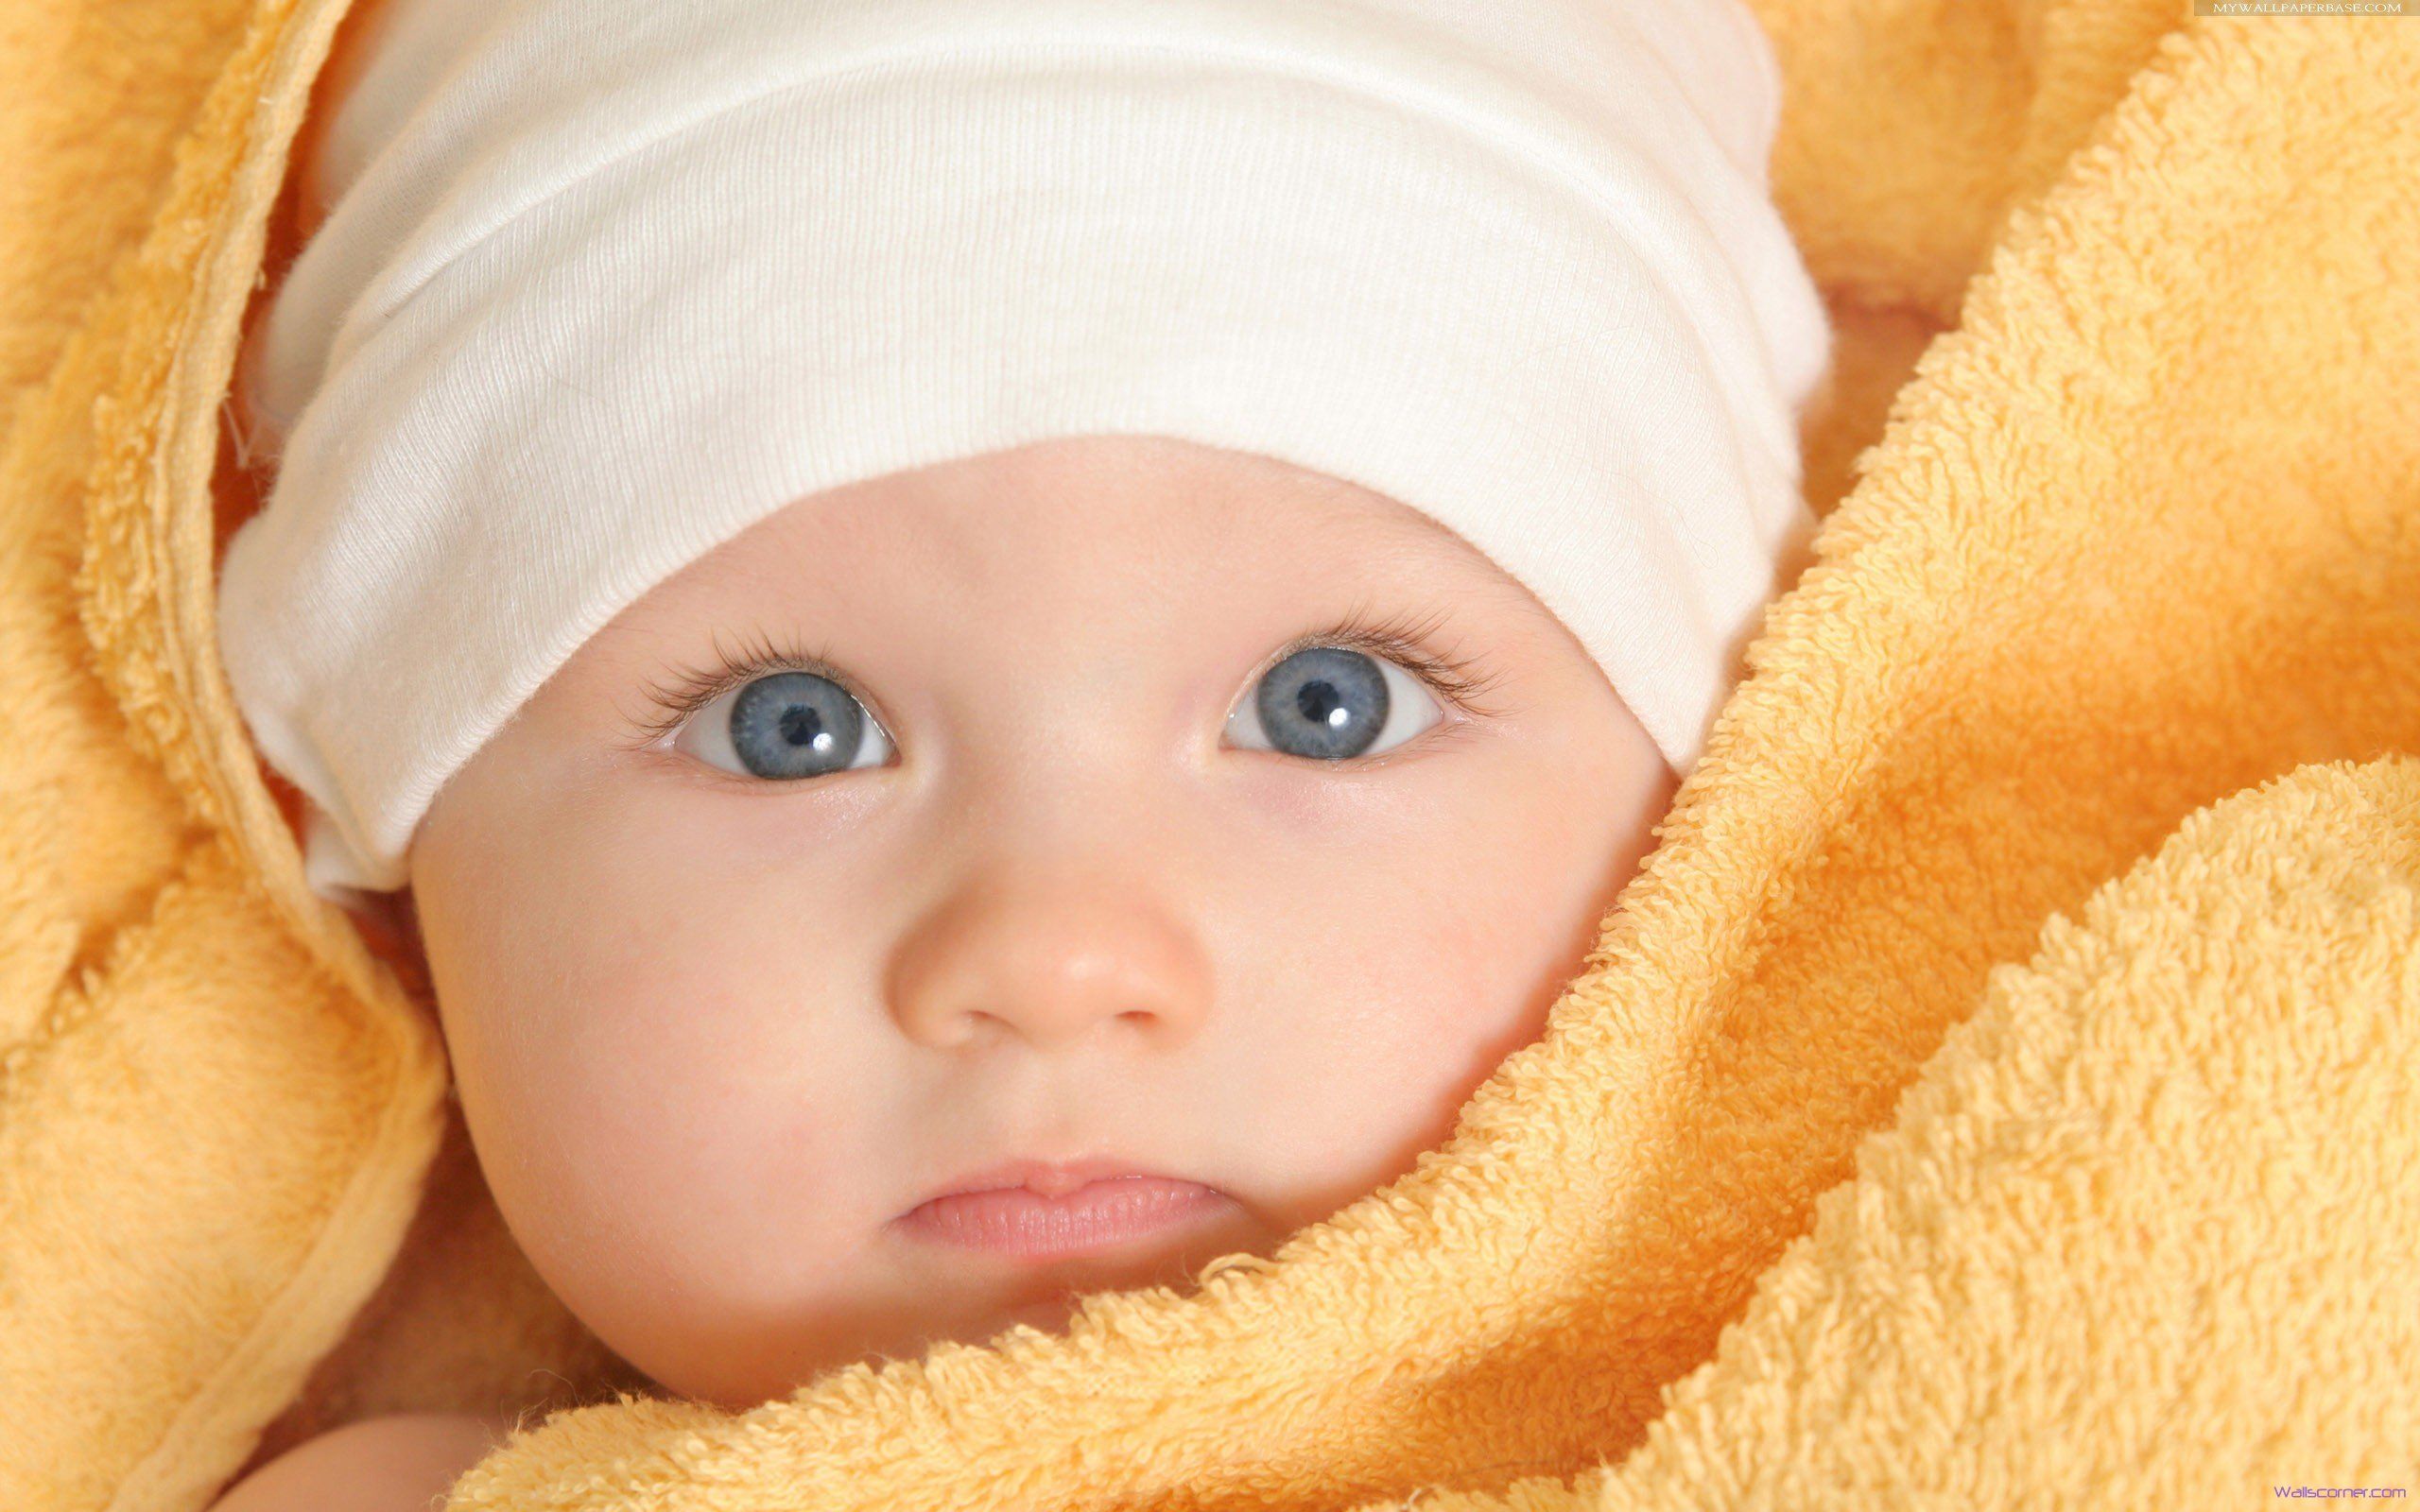 Cute newborn baby HD Wallpaper. Cute baby boy picture, Cute baby wallpaper, Baby boy picture